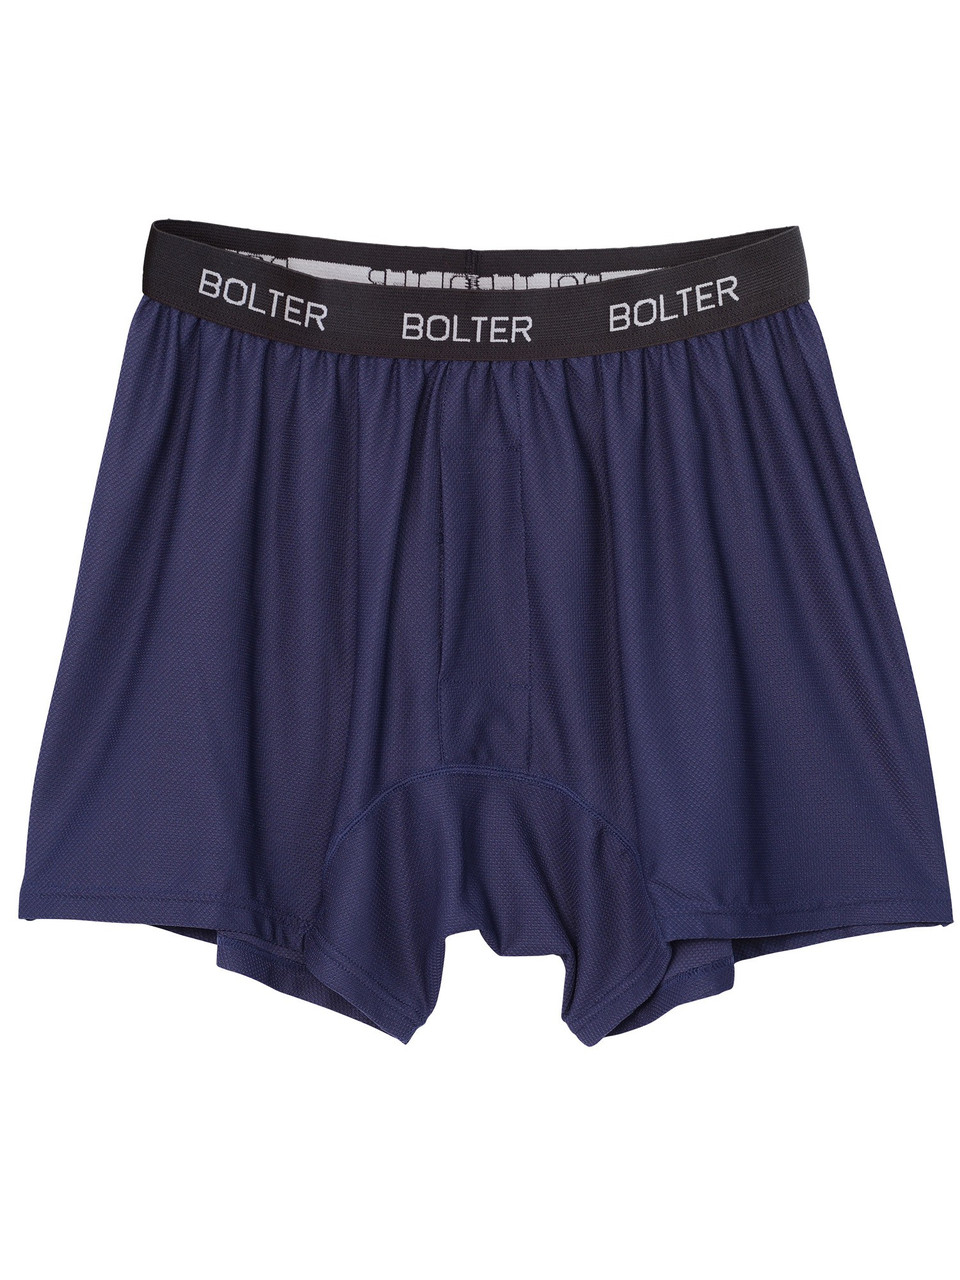 Bolter 4-Pack Men Nylon Spandex Performance Boxer Briefs (Large, Neons)